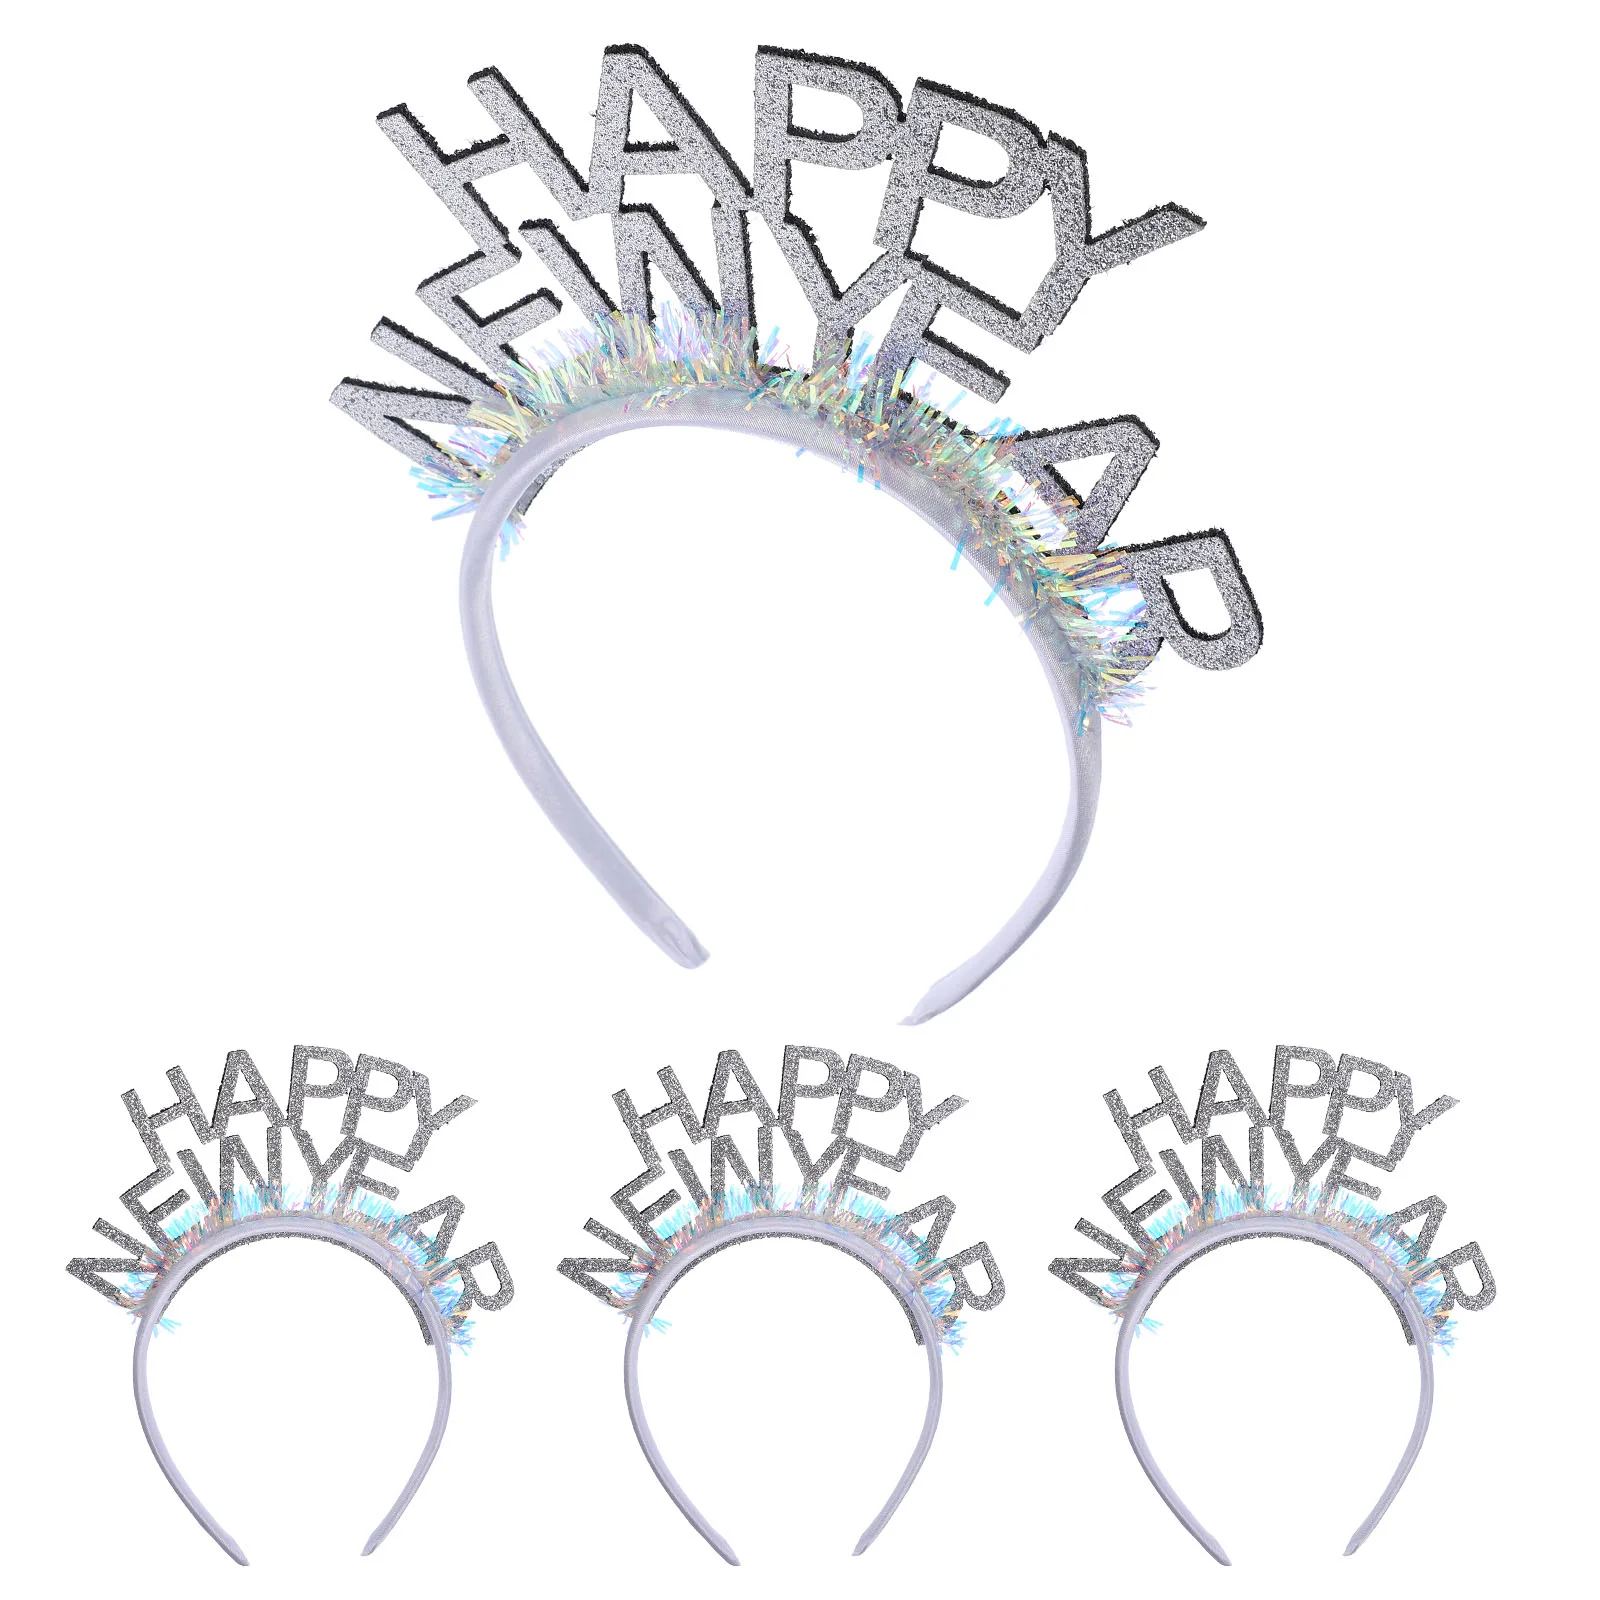 

4 Pcs Bathroom Decorations Happy New Year Headband Party Hair Accessories Glitter Headgear for Girl Women's